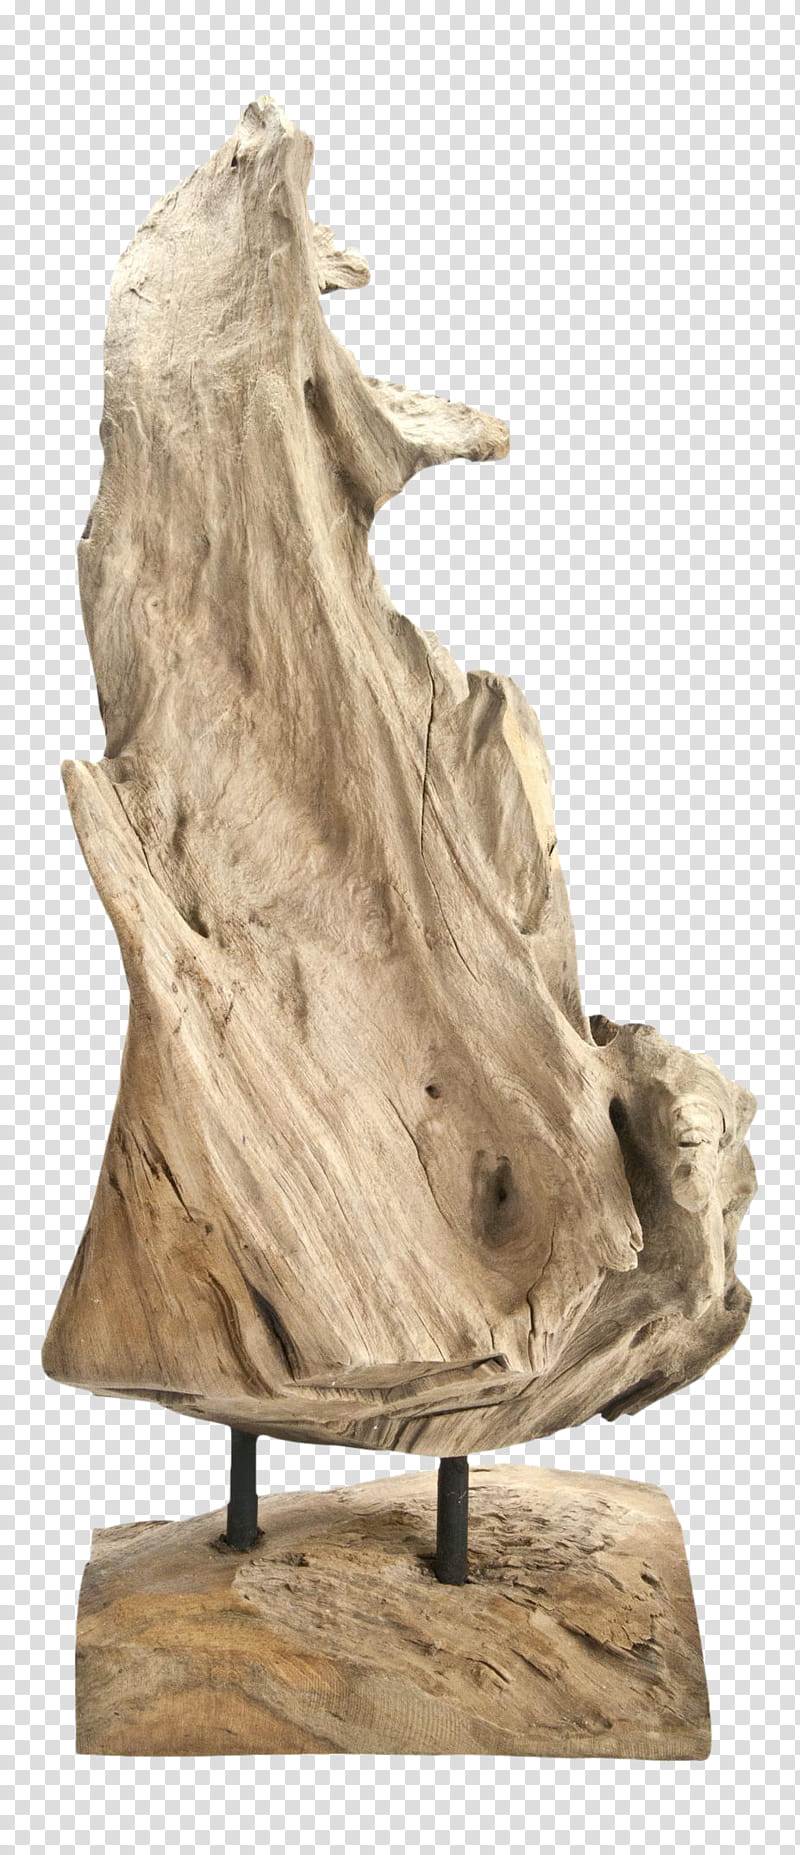 Tree Trunk, Sculpture, Wood, Figurine, Statue, Classical Sculpture, Beige, Carving transparent background PNG clipart